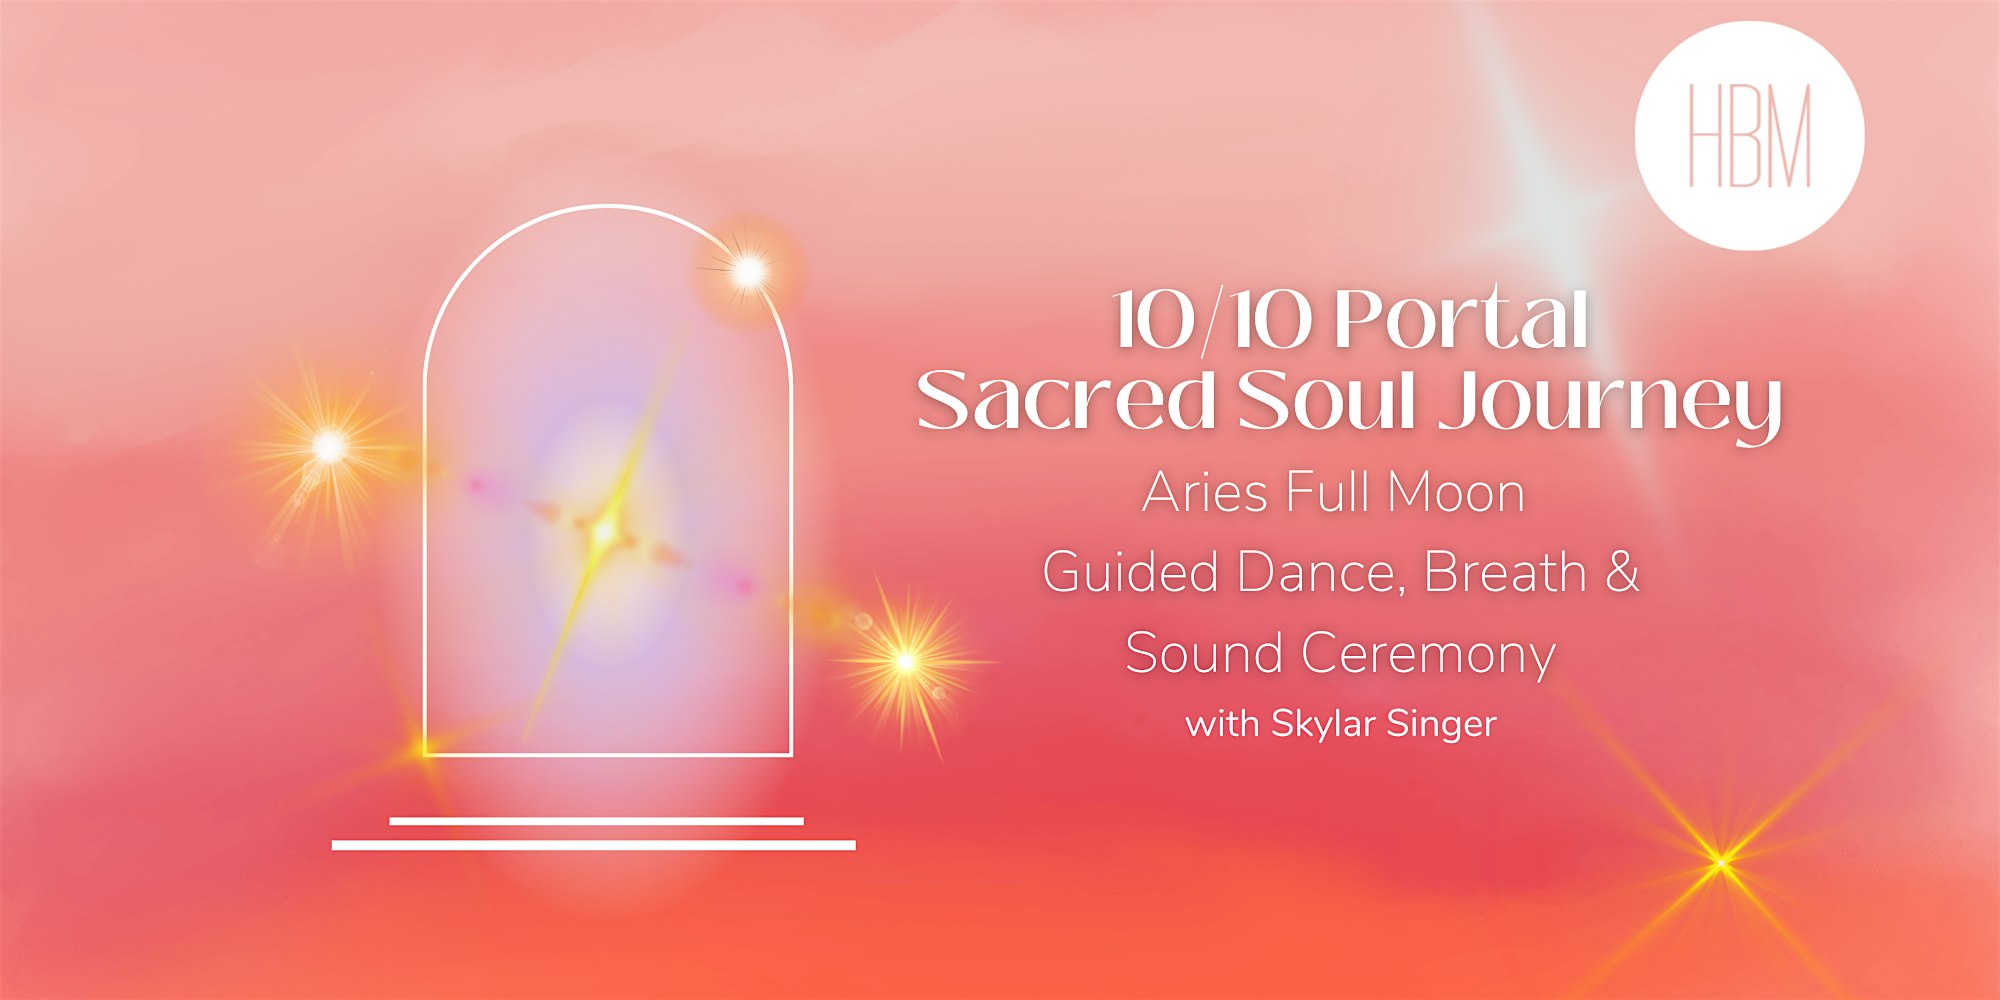 10/10 Portal Soul Journey : Aries Full Moon Breath, Dance, Sound Ceremony